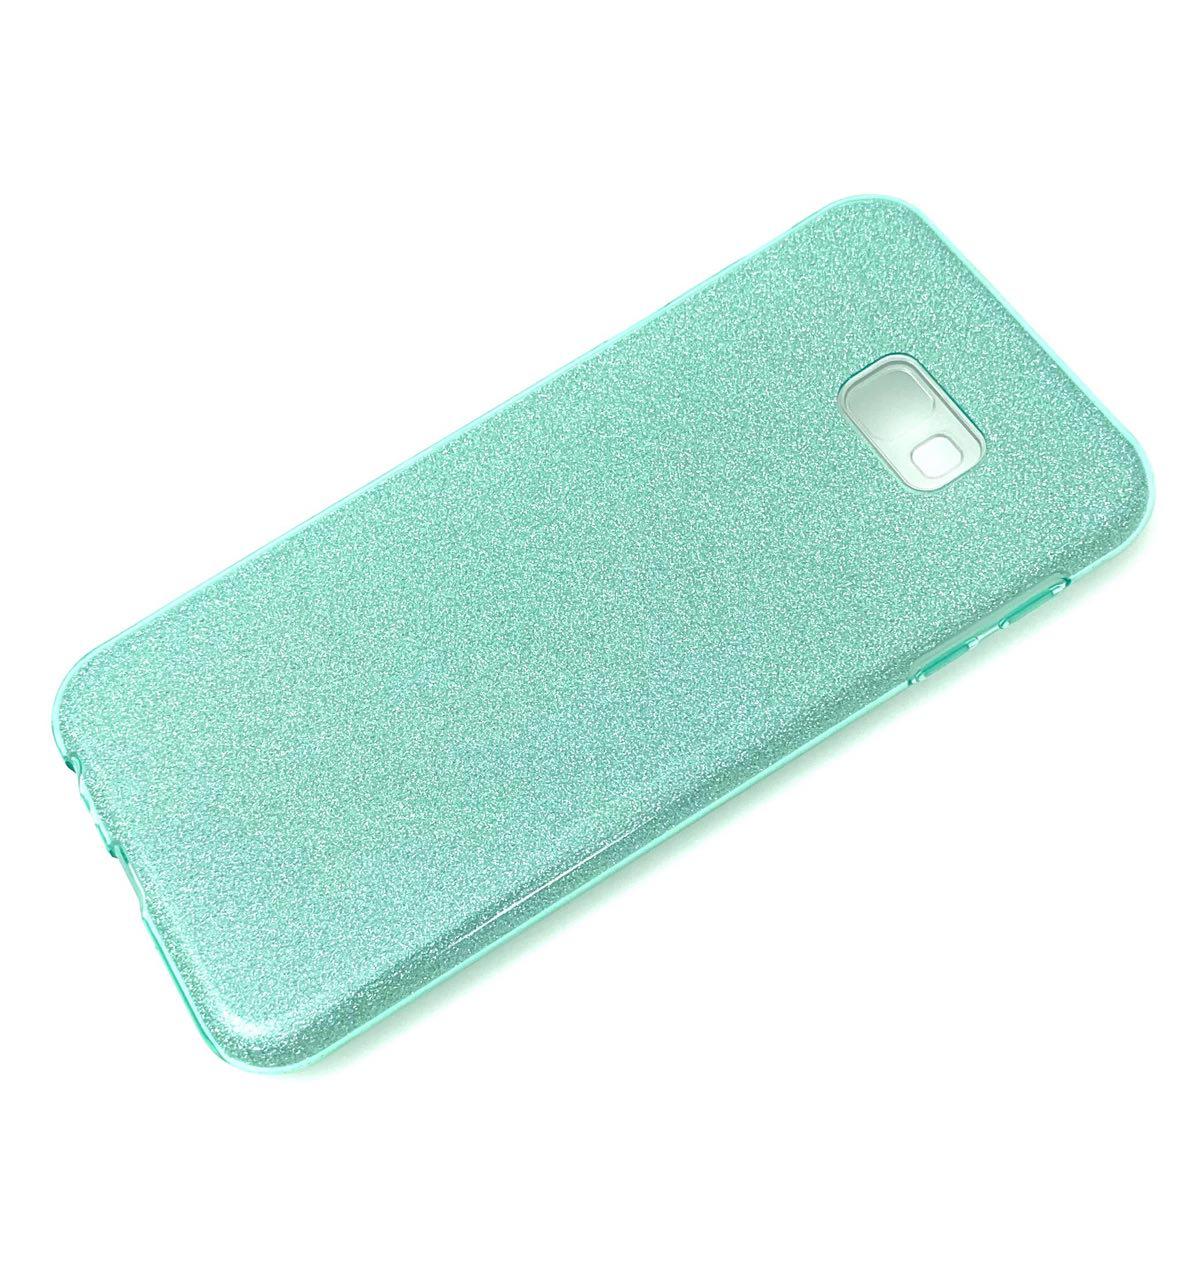 Чехол накладка Shine для SAMSUNG Galaxy J4 Plus 2018 (SM-J415), силикон, блестки, цвет зеленый.